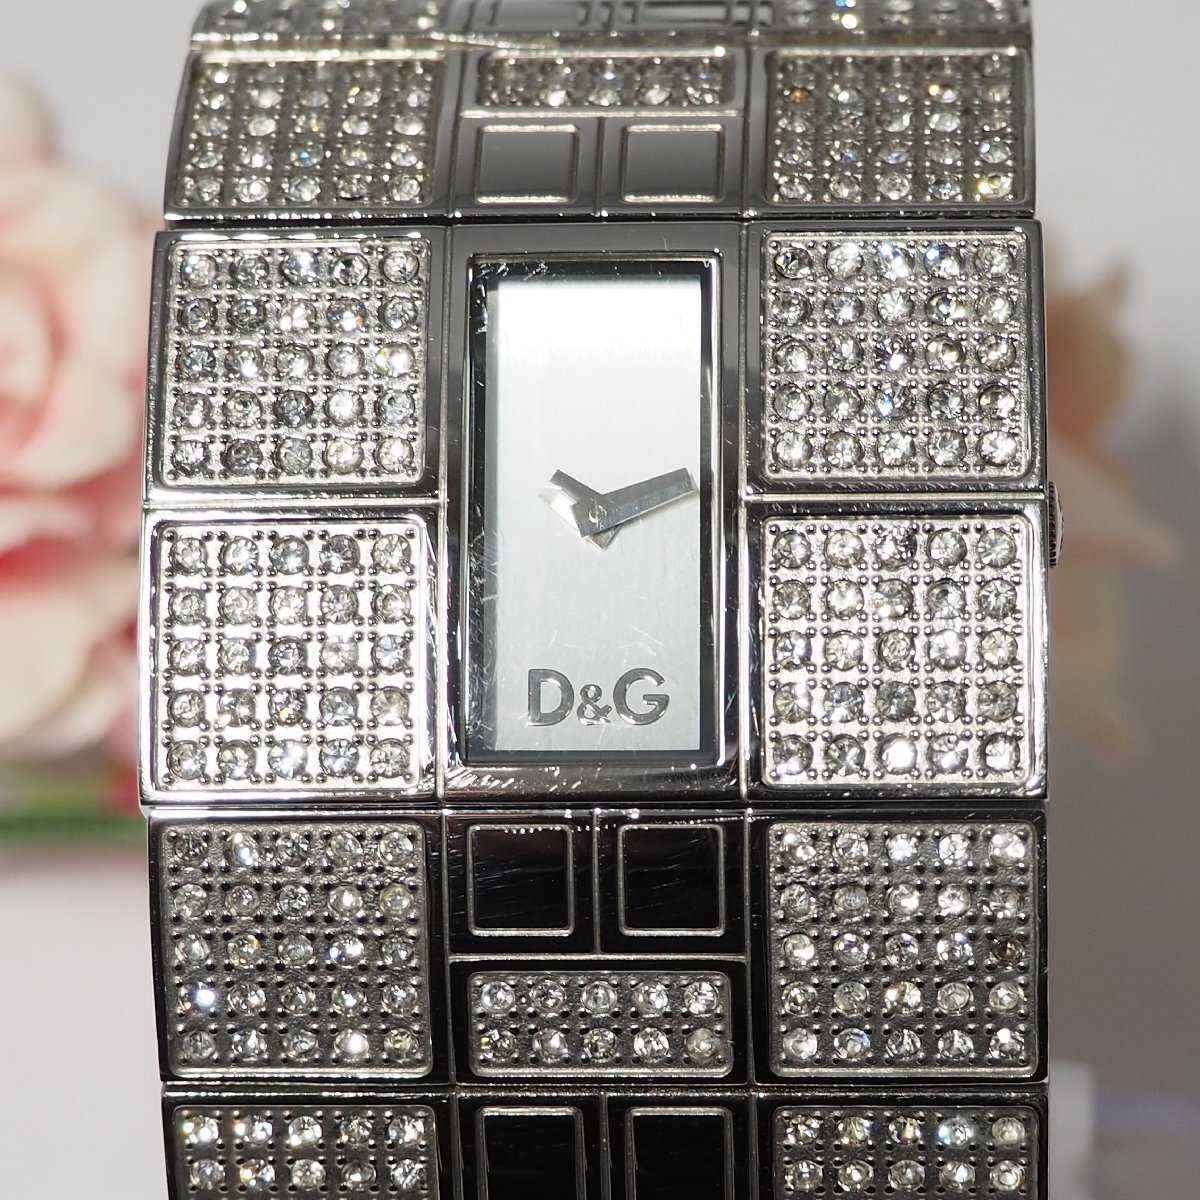  Dolce & Gabbana D&G Stone bangle watch wristwatch combination C446